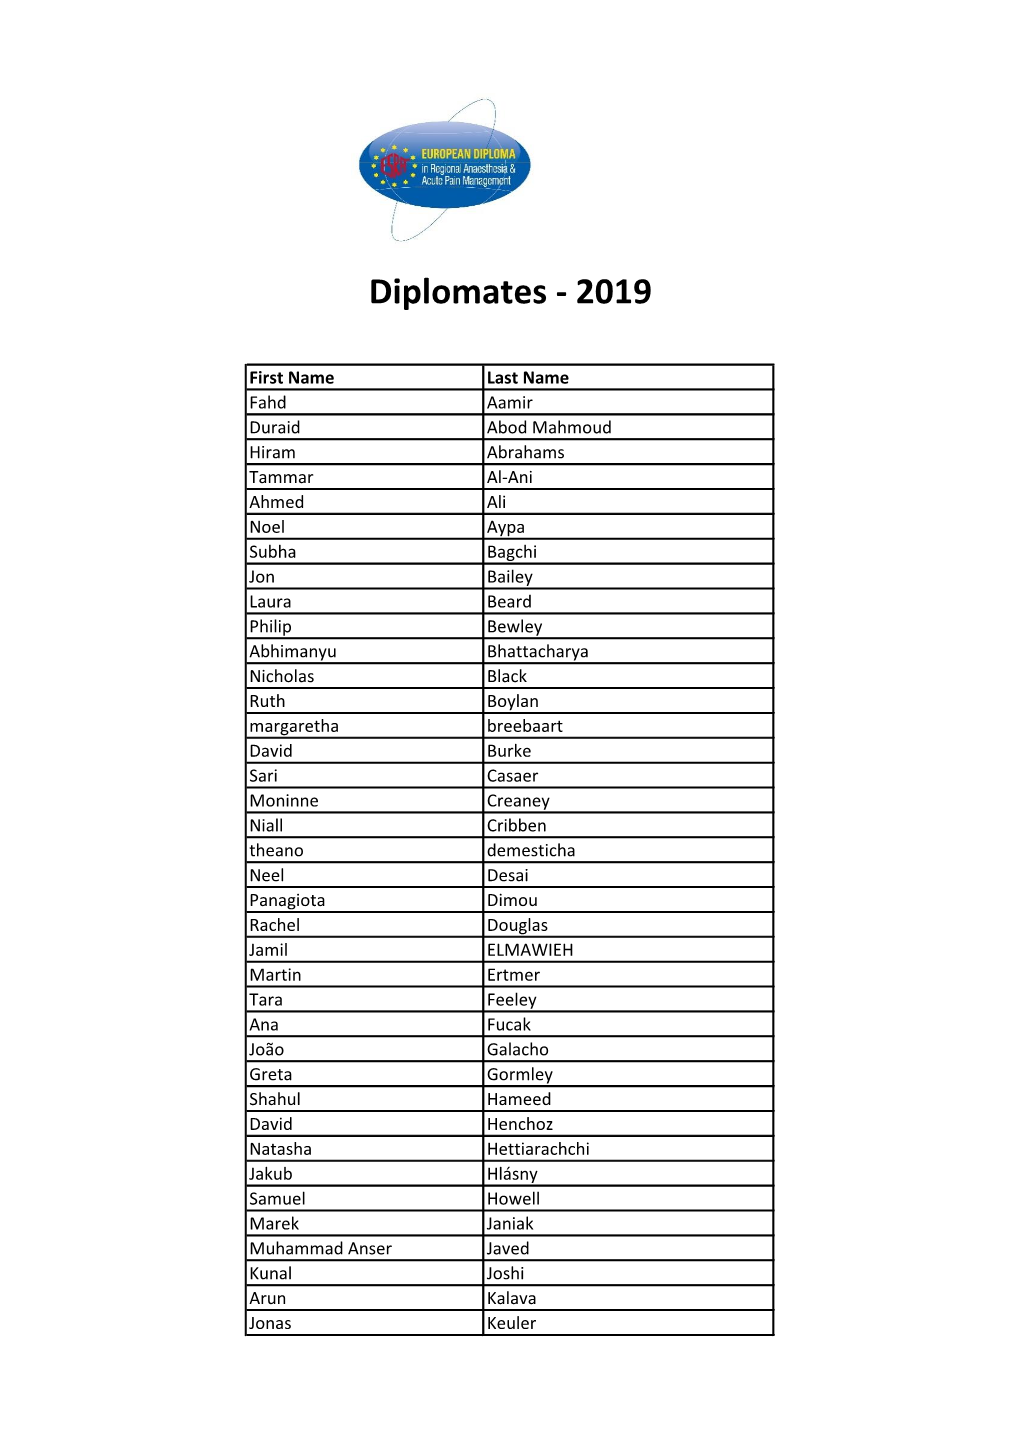 Diplomates - 2019